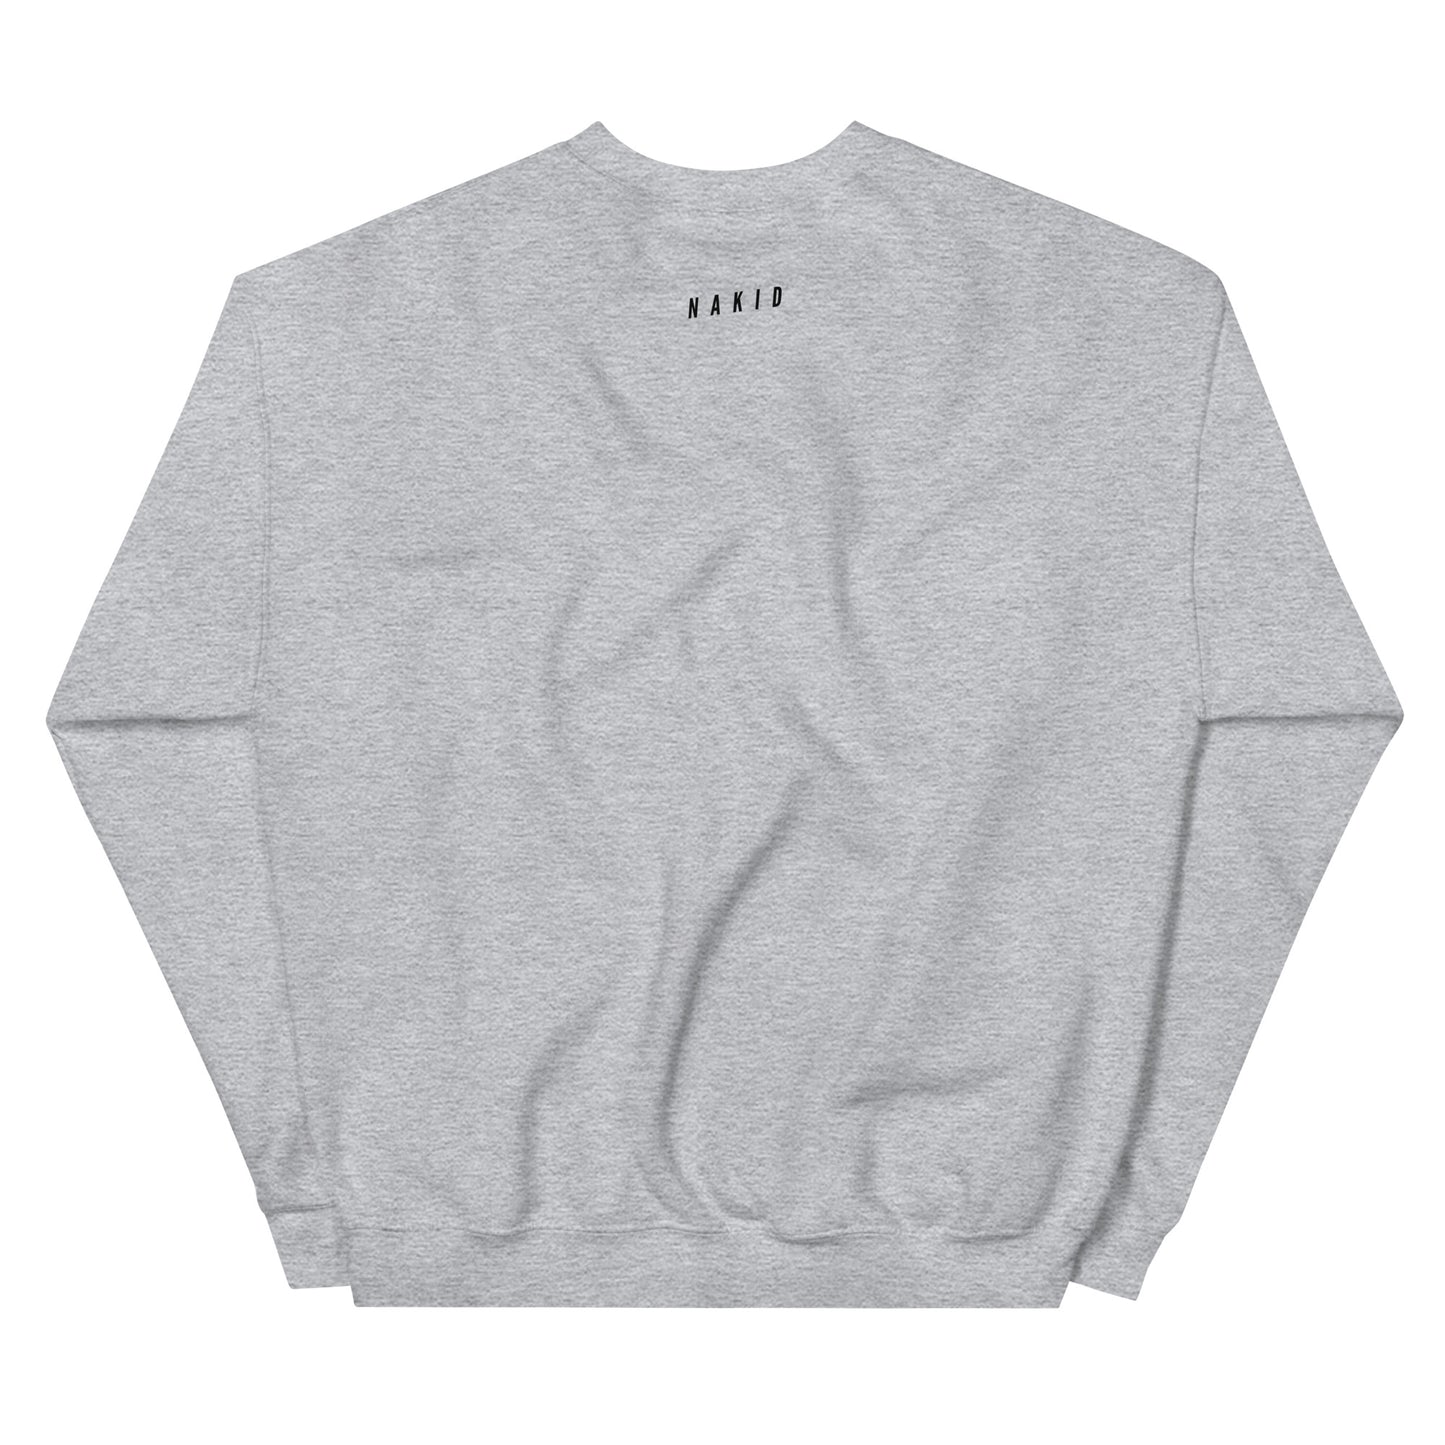 “BAD CLVB” Unisex Sweatshirt